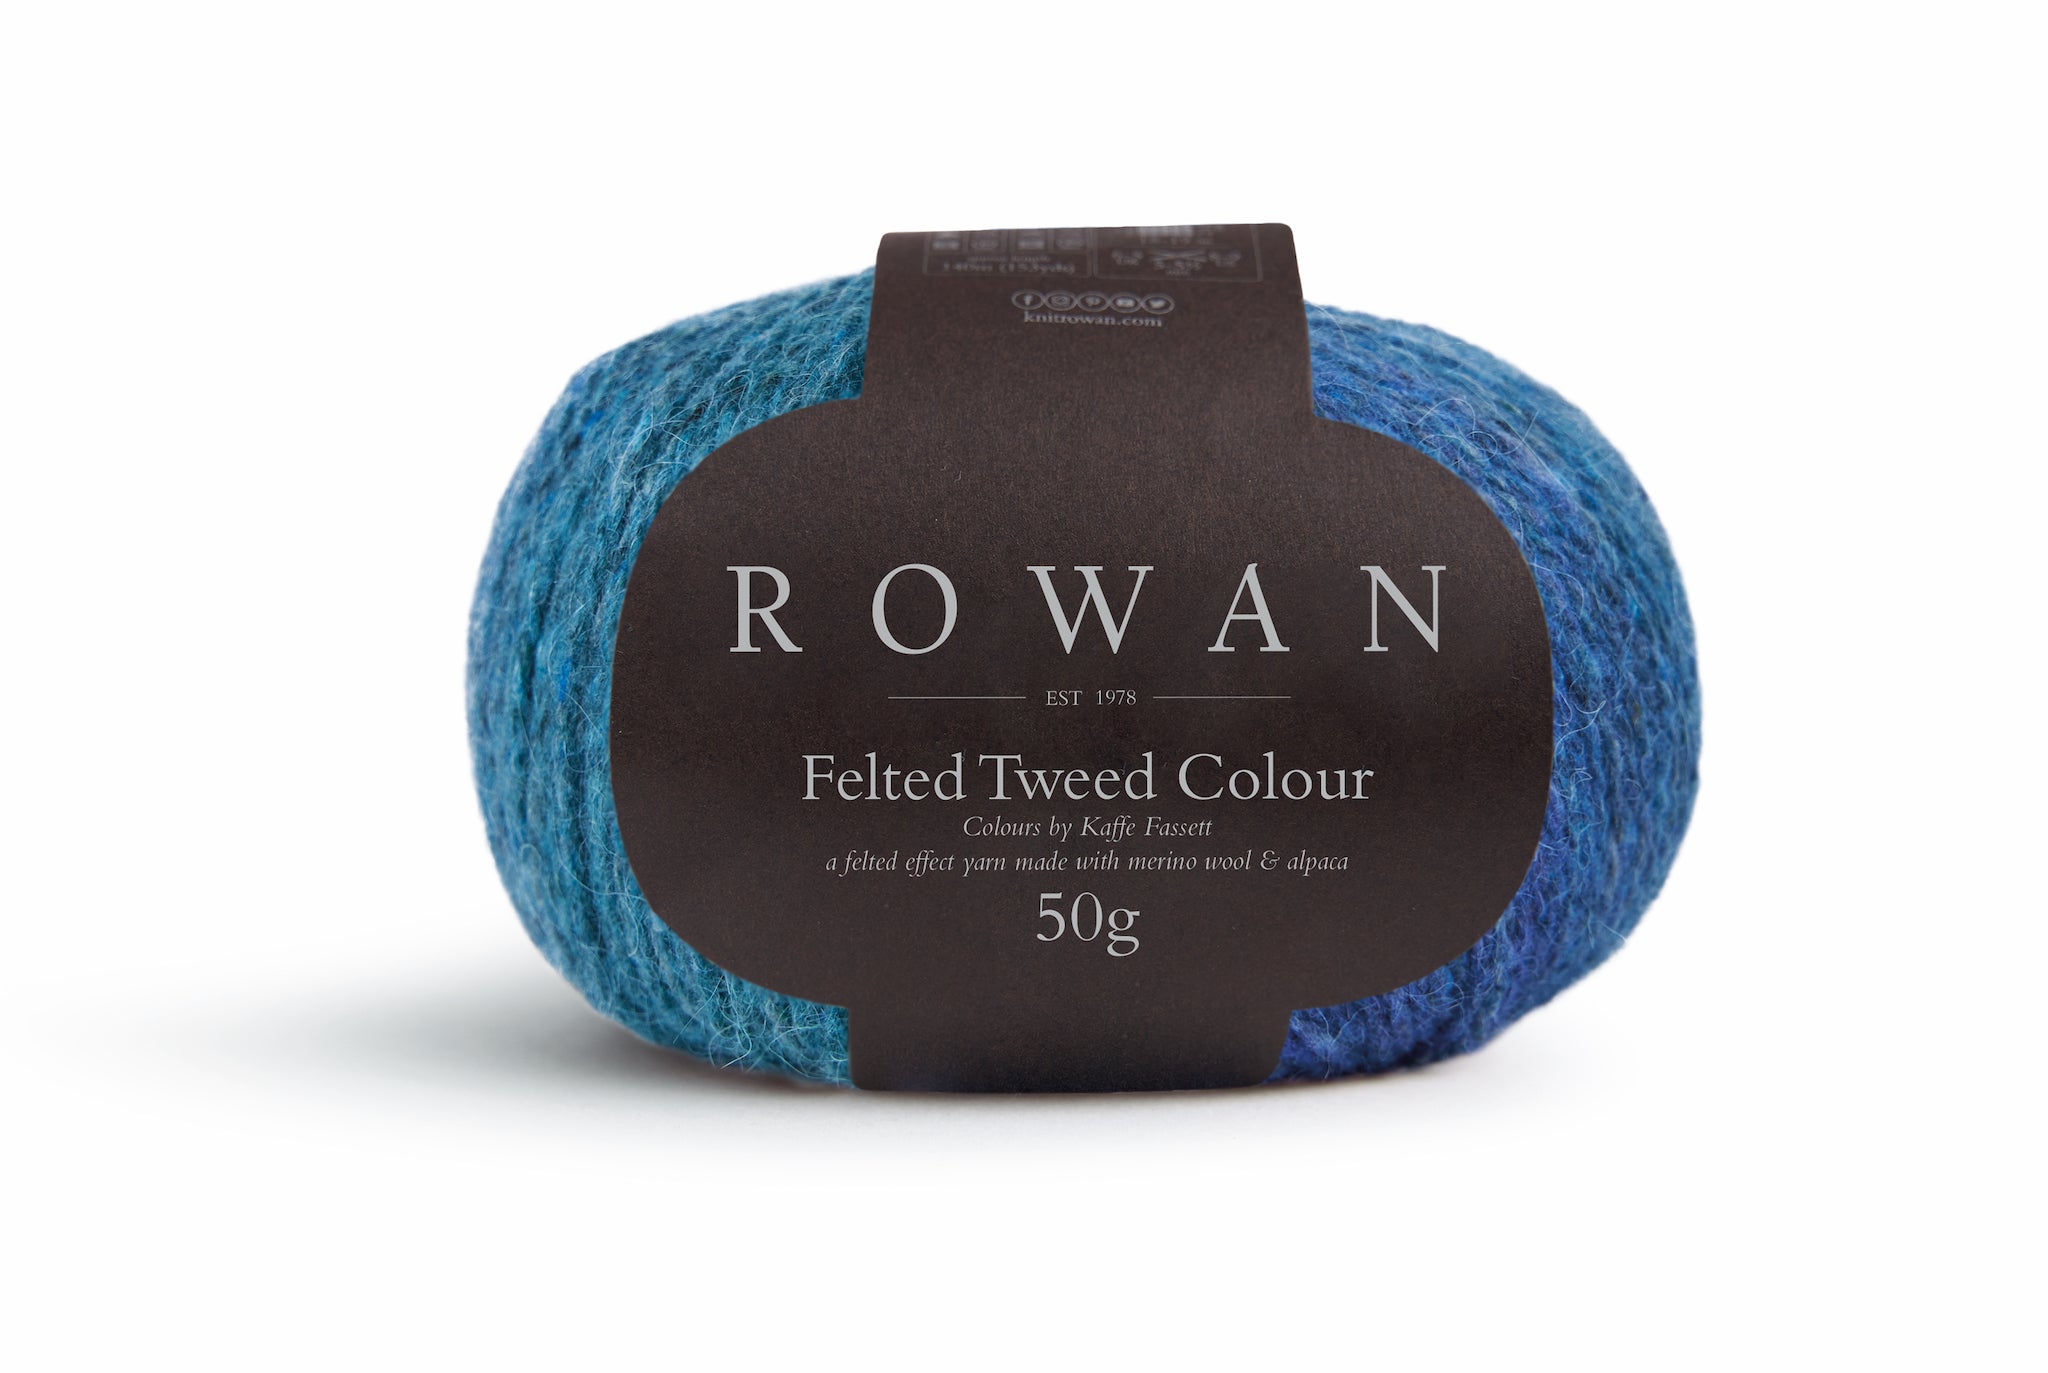 Rowan Felted Tweed Colour in Amethyst - 026